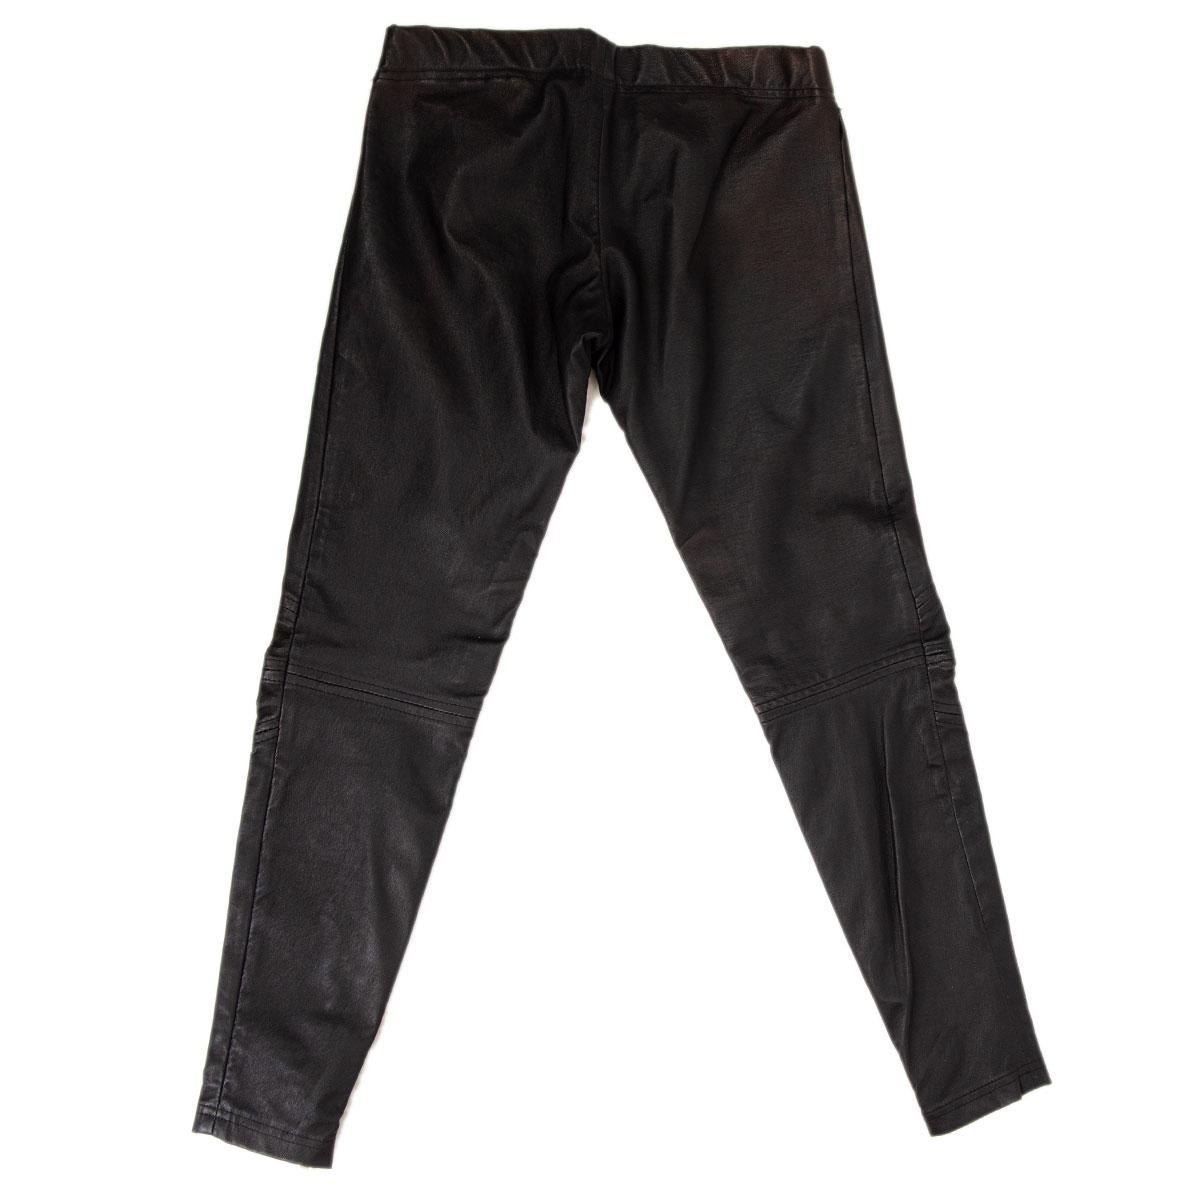 BALMAIN KIDS: pants for girls - Black | Balmain Kids pants BT6A20J0035  online on GIGLIO.COM